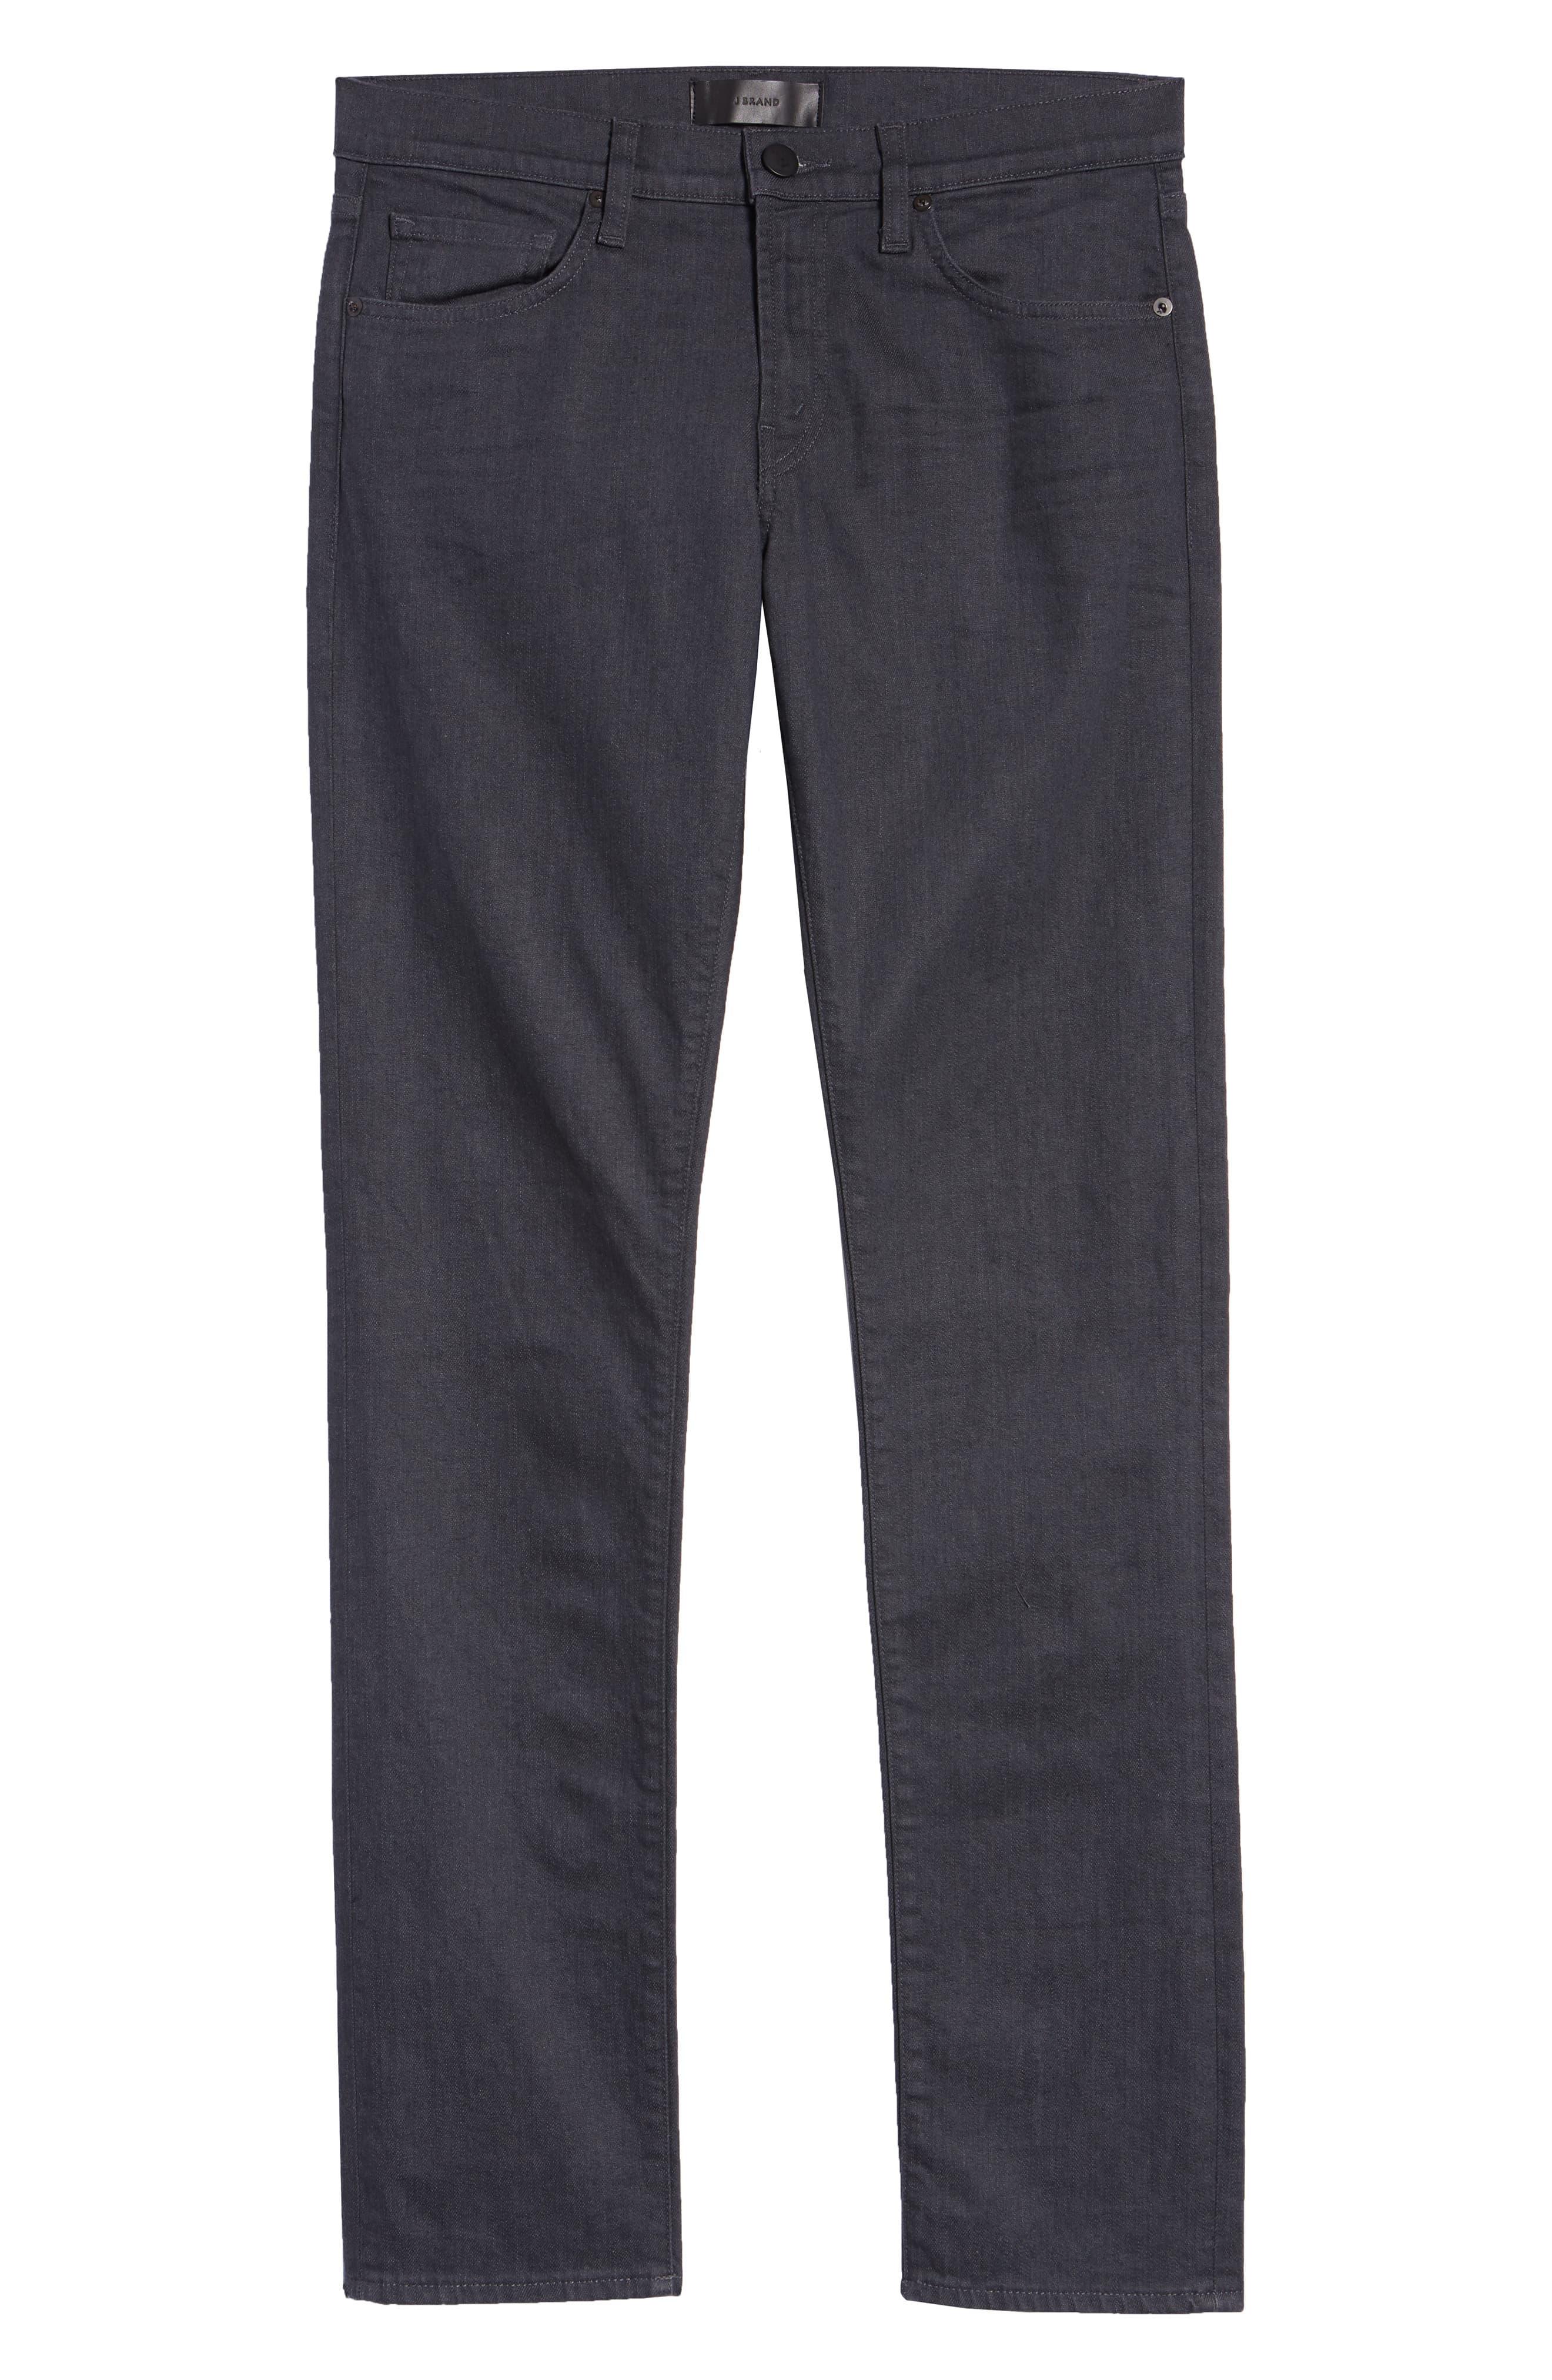 J Brand Denim Tyler Slim Fit Jeans in Grey (Gray) for Men - Lyst